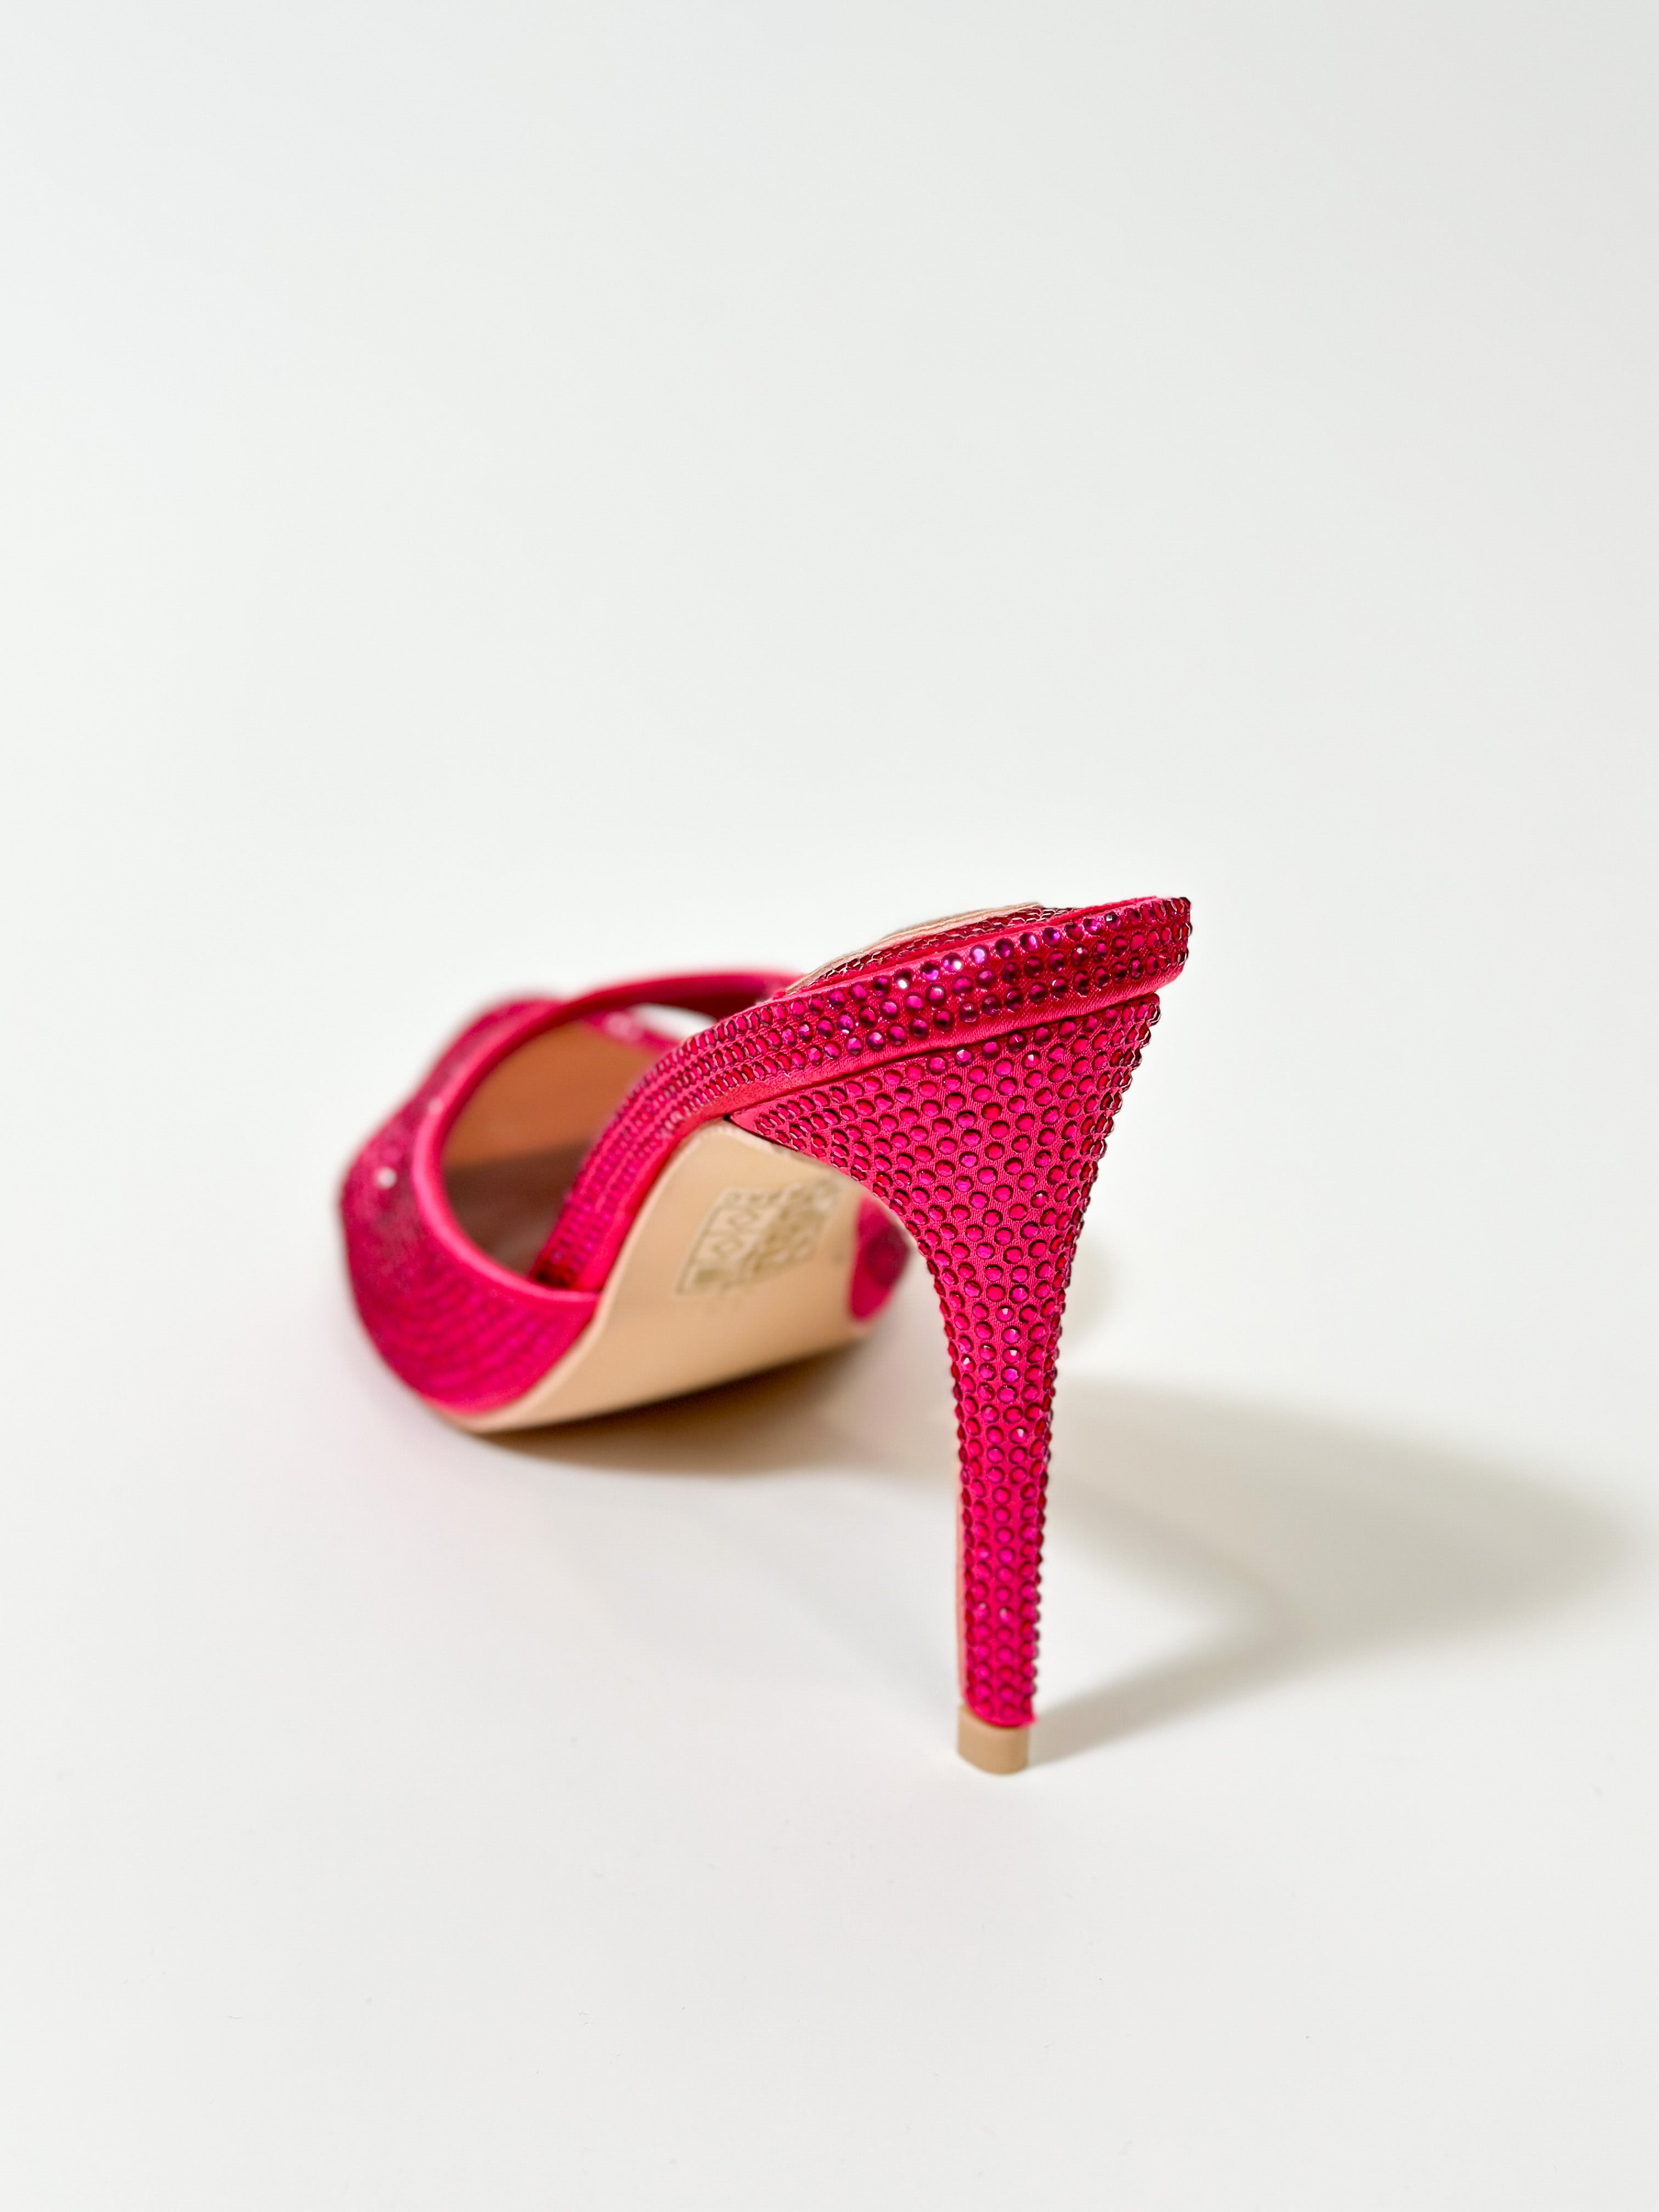 Papuci femei roz stileto cu pietre